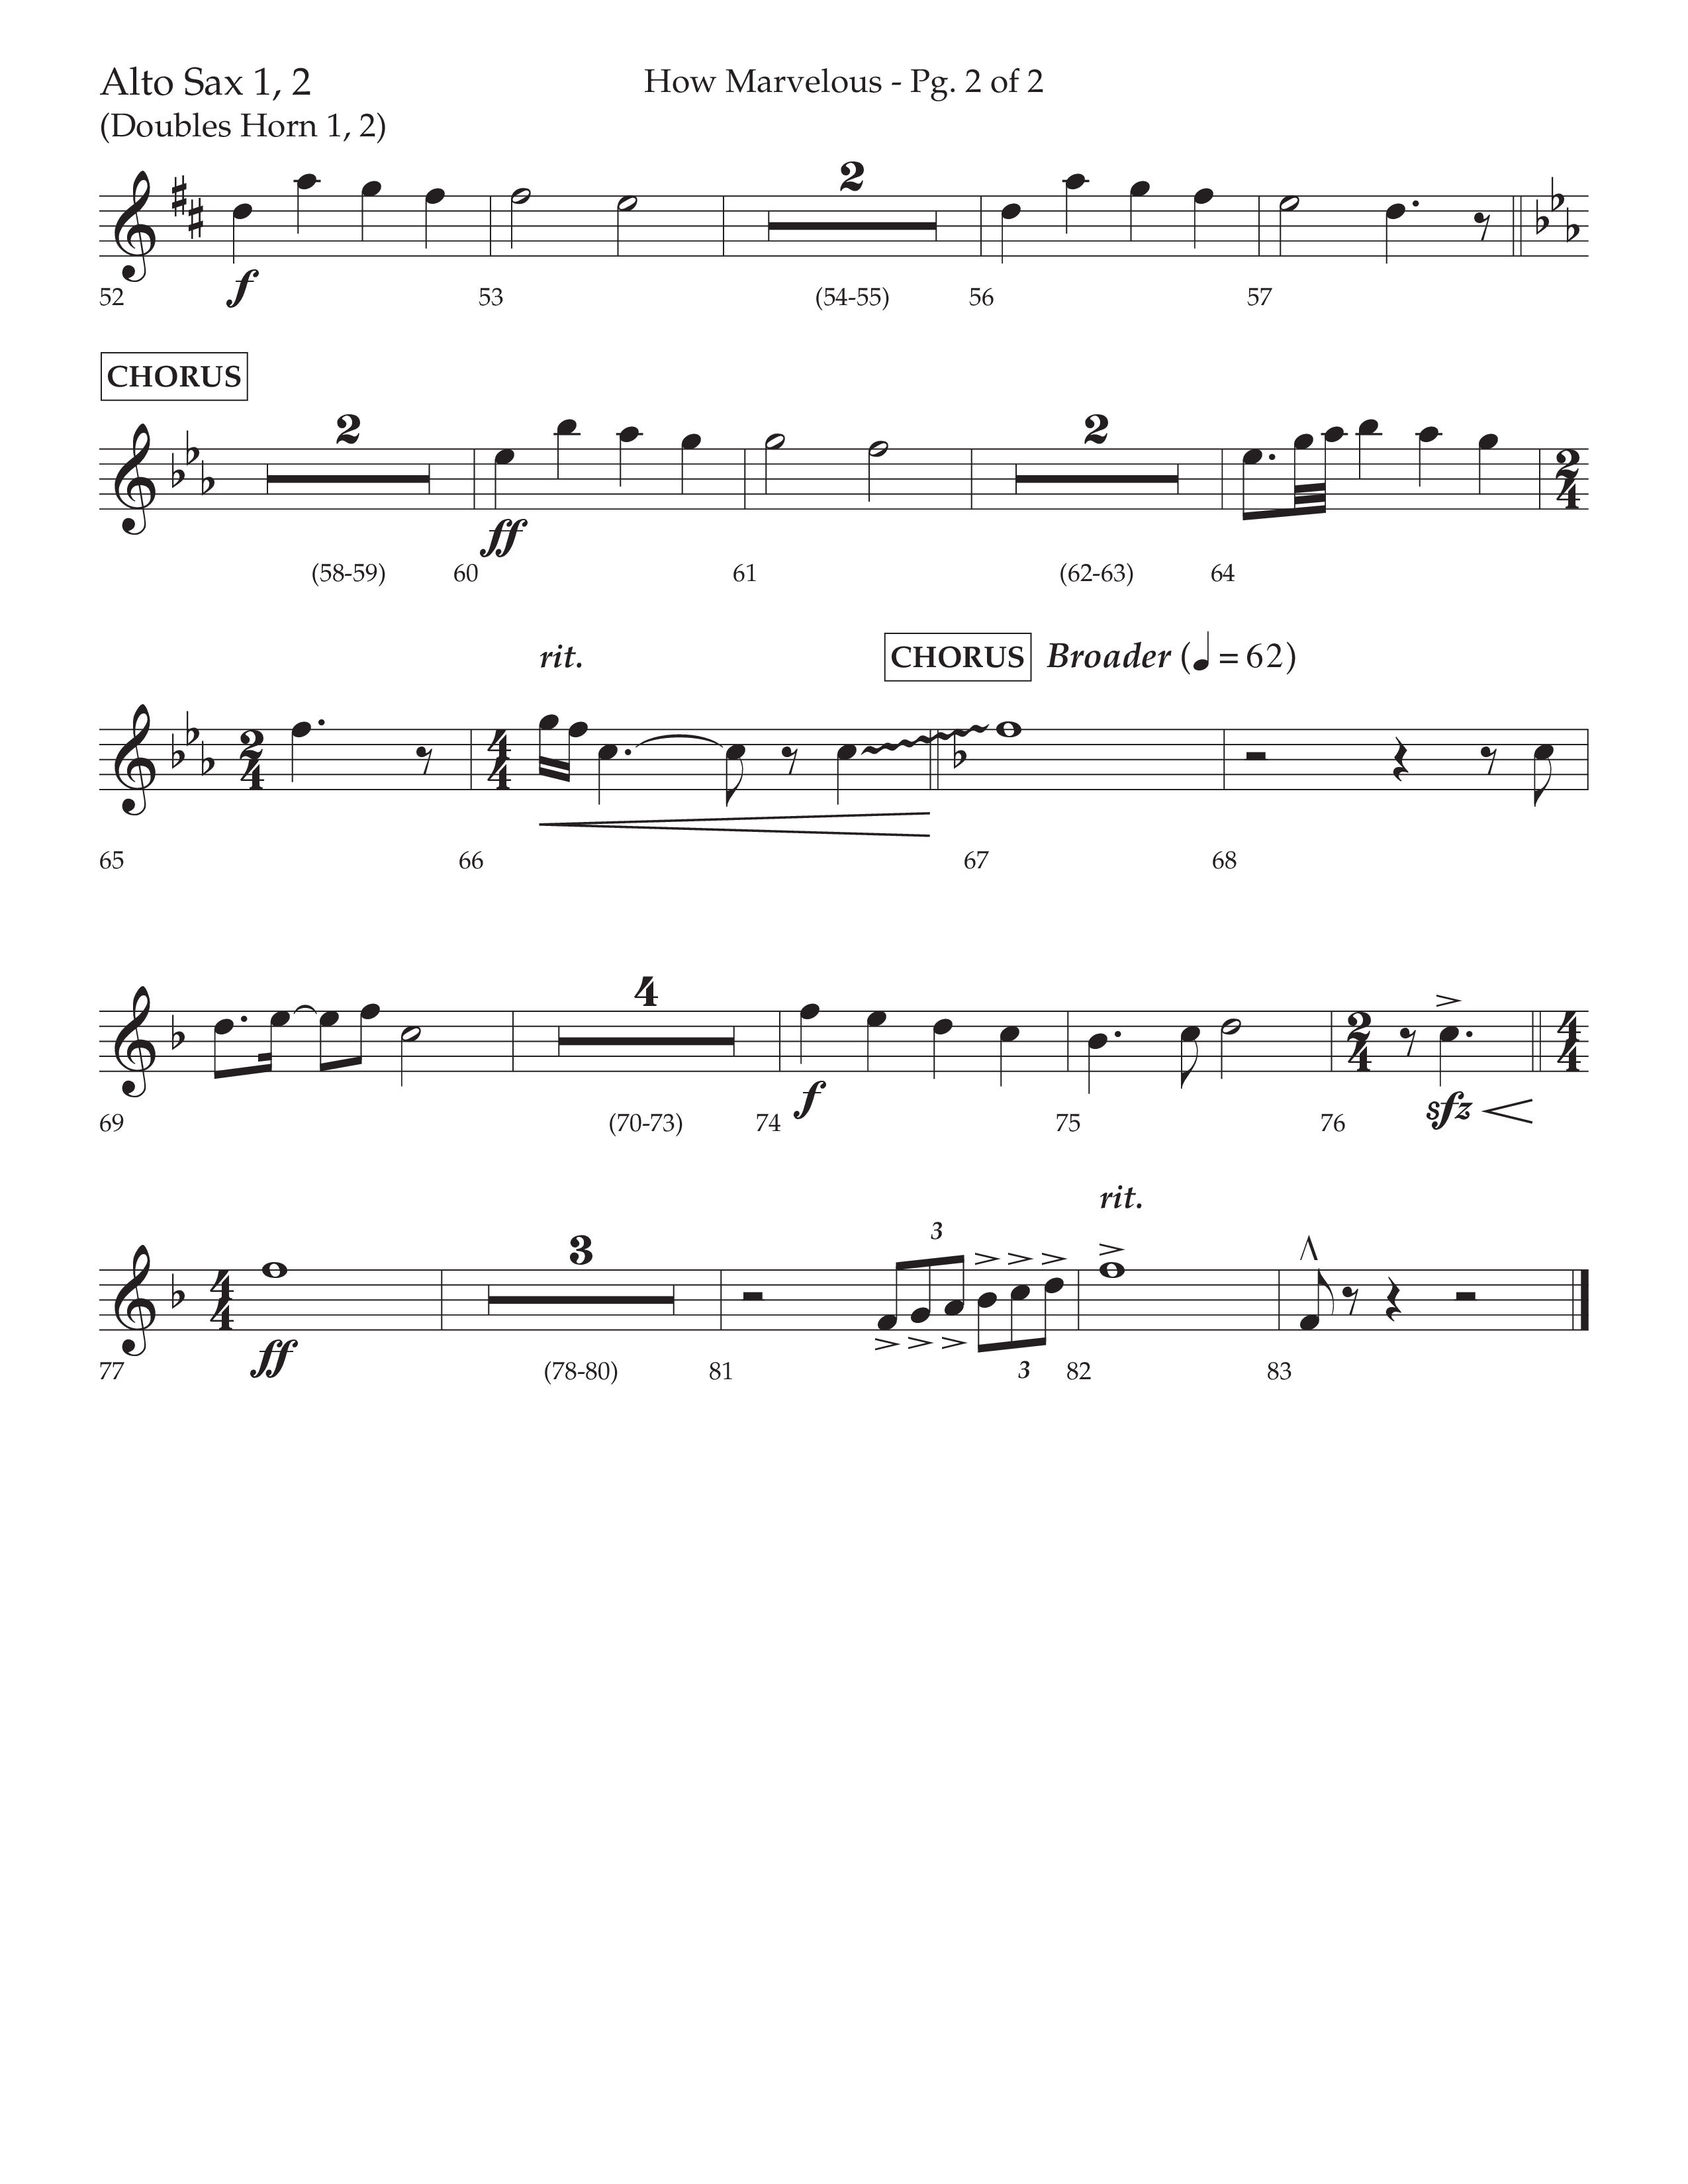 How Marvelous Medley (Choral Anthem SATB) Alto Sax 1/2 (Lifeway Choral / Arr. David Wise / Orch. Cliff Duren)